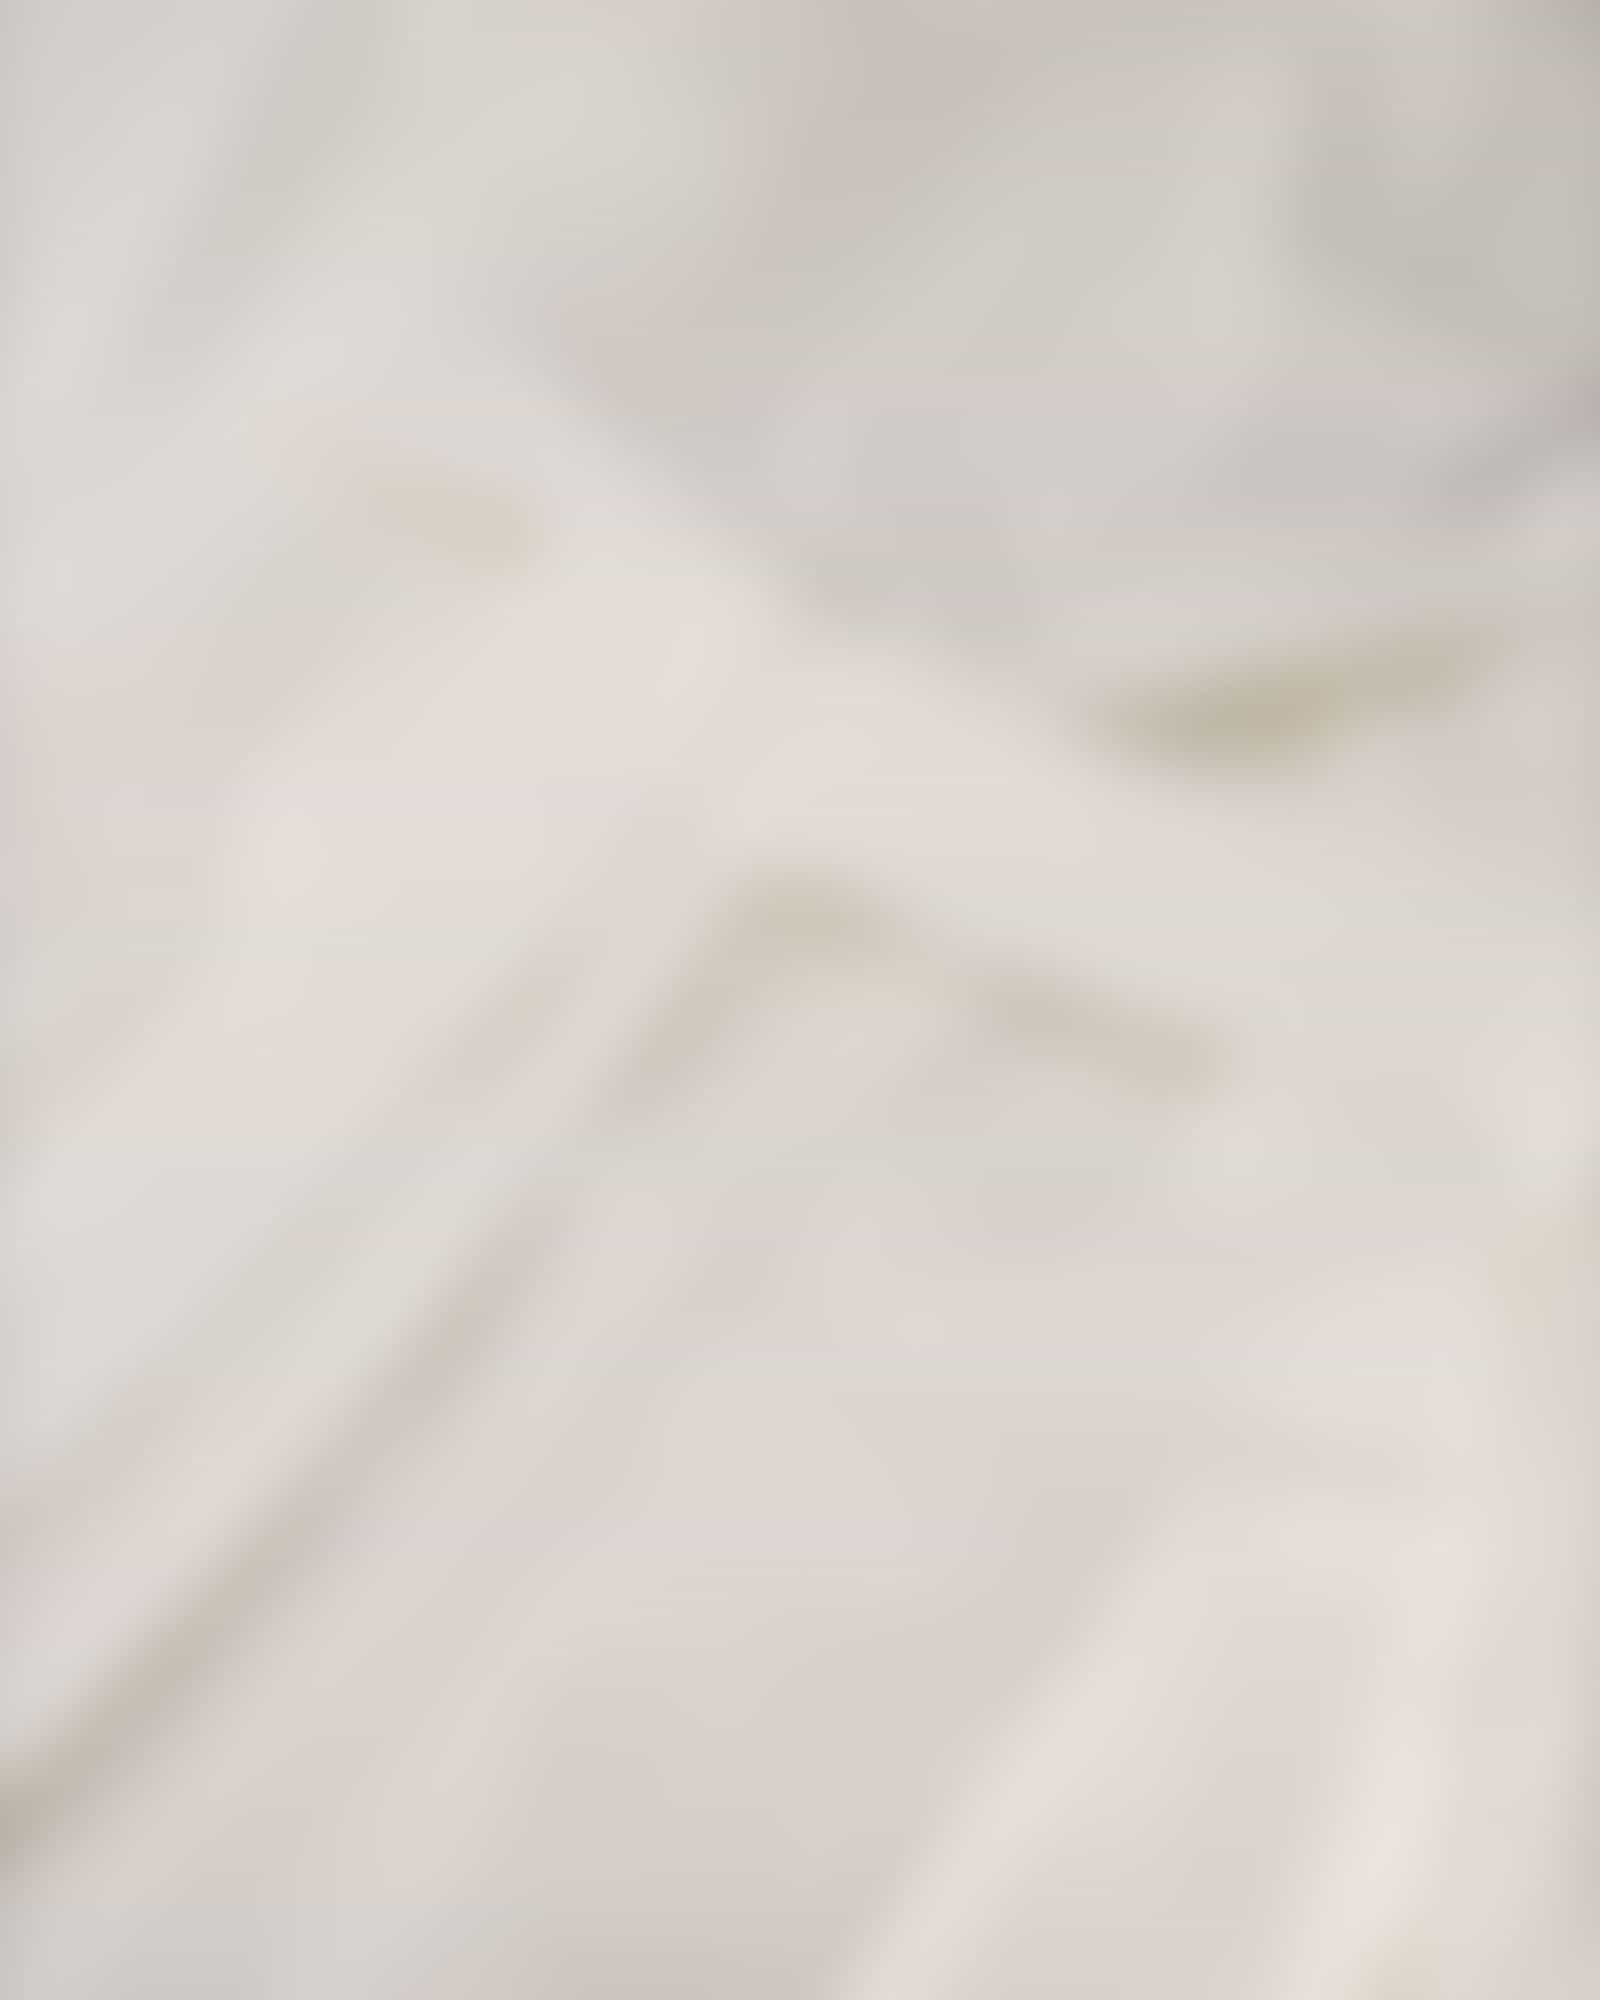 JOOP Herren Bademantel Kimono Pique 1656 - Farbe: Weiß - 600 - XL